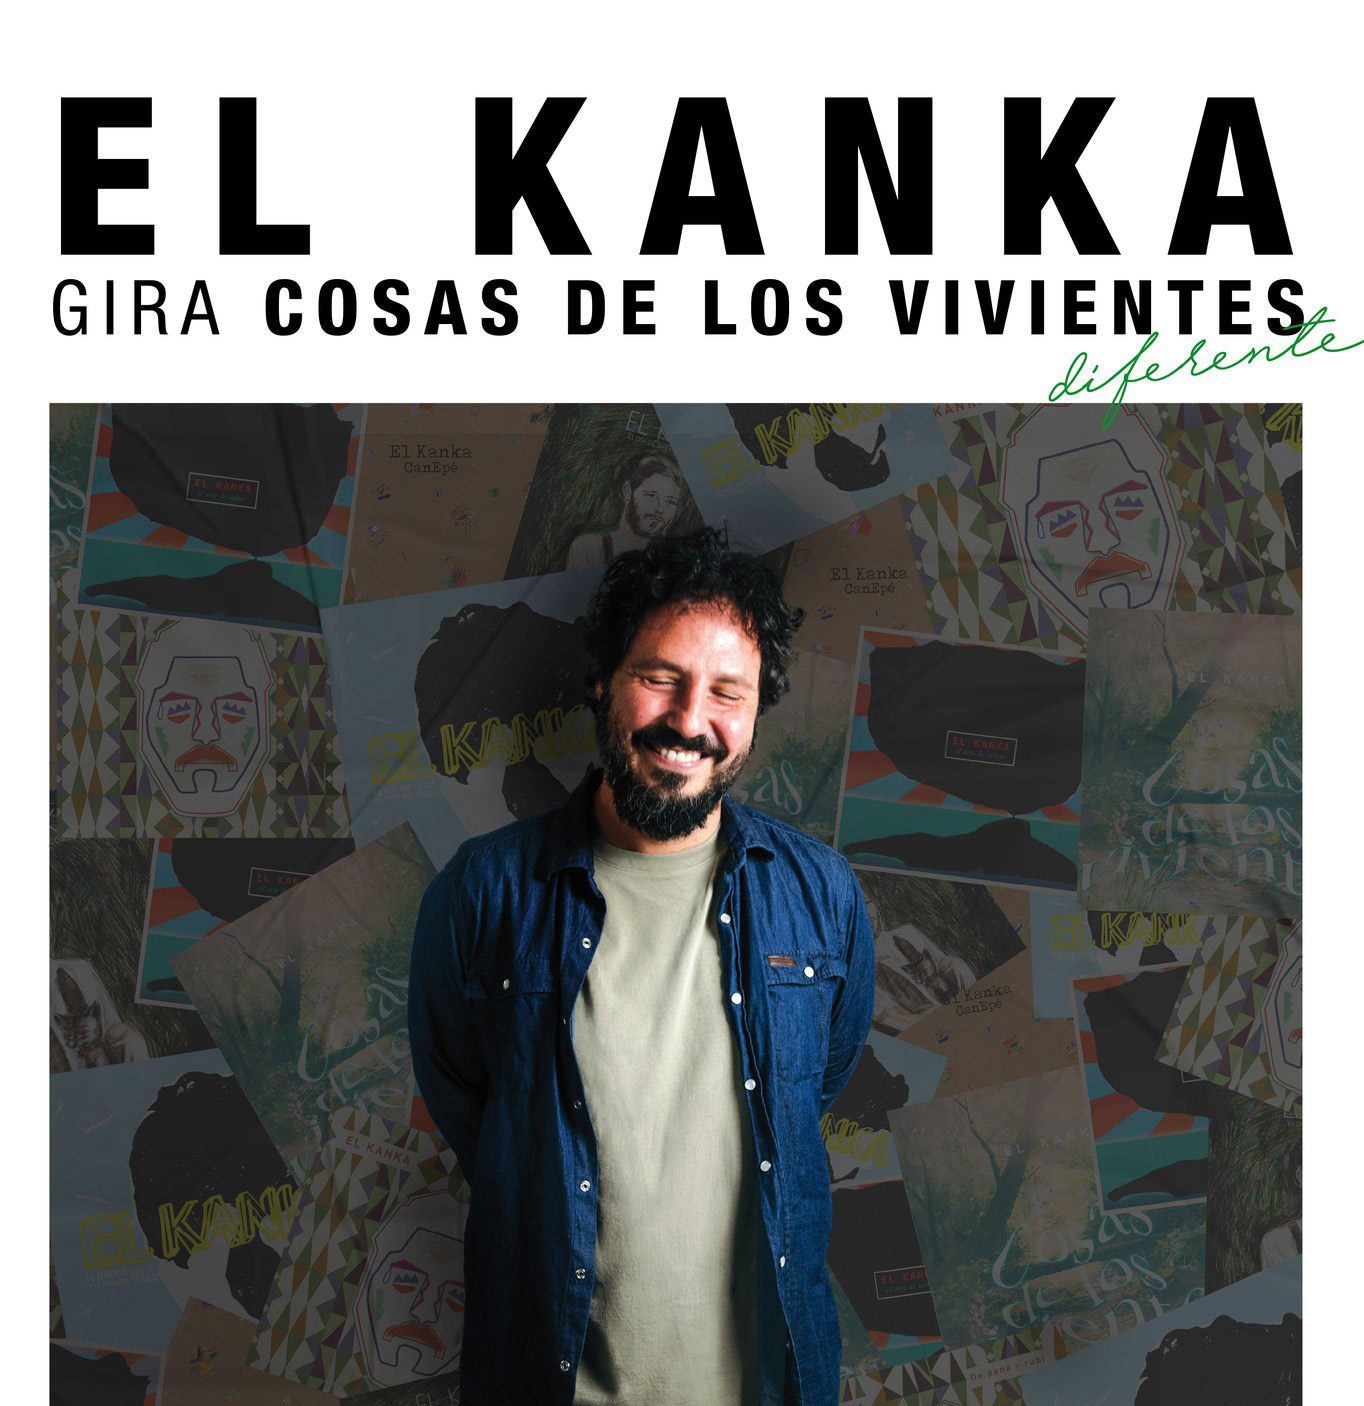 El Kanka en Santa Cruz de La Palma